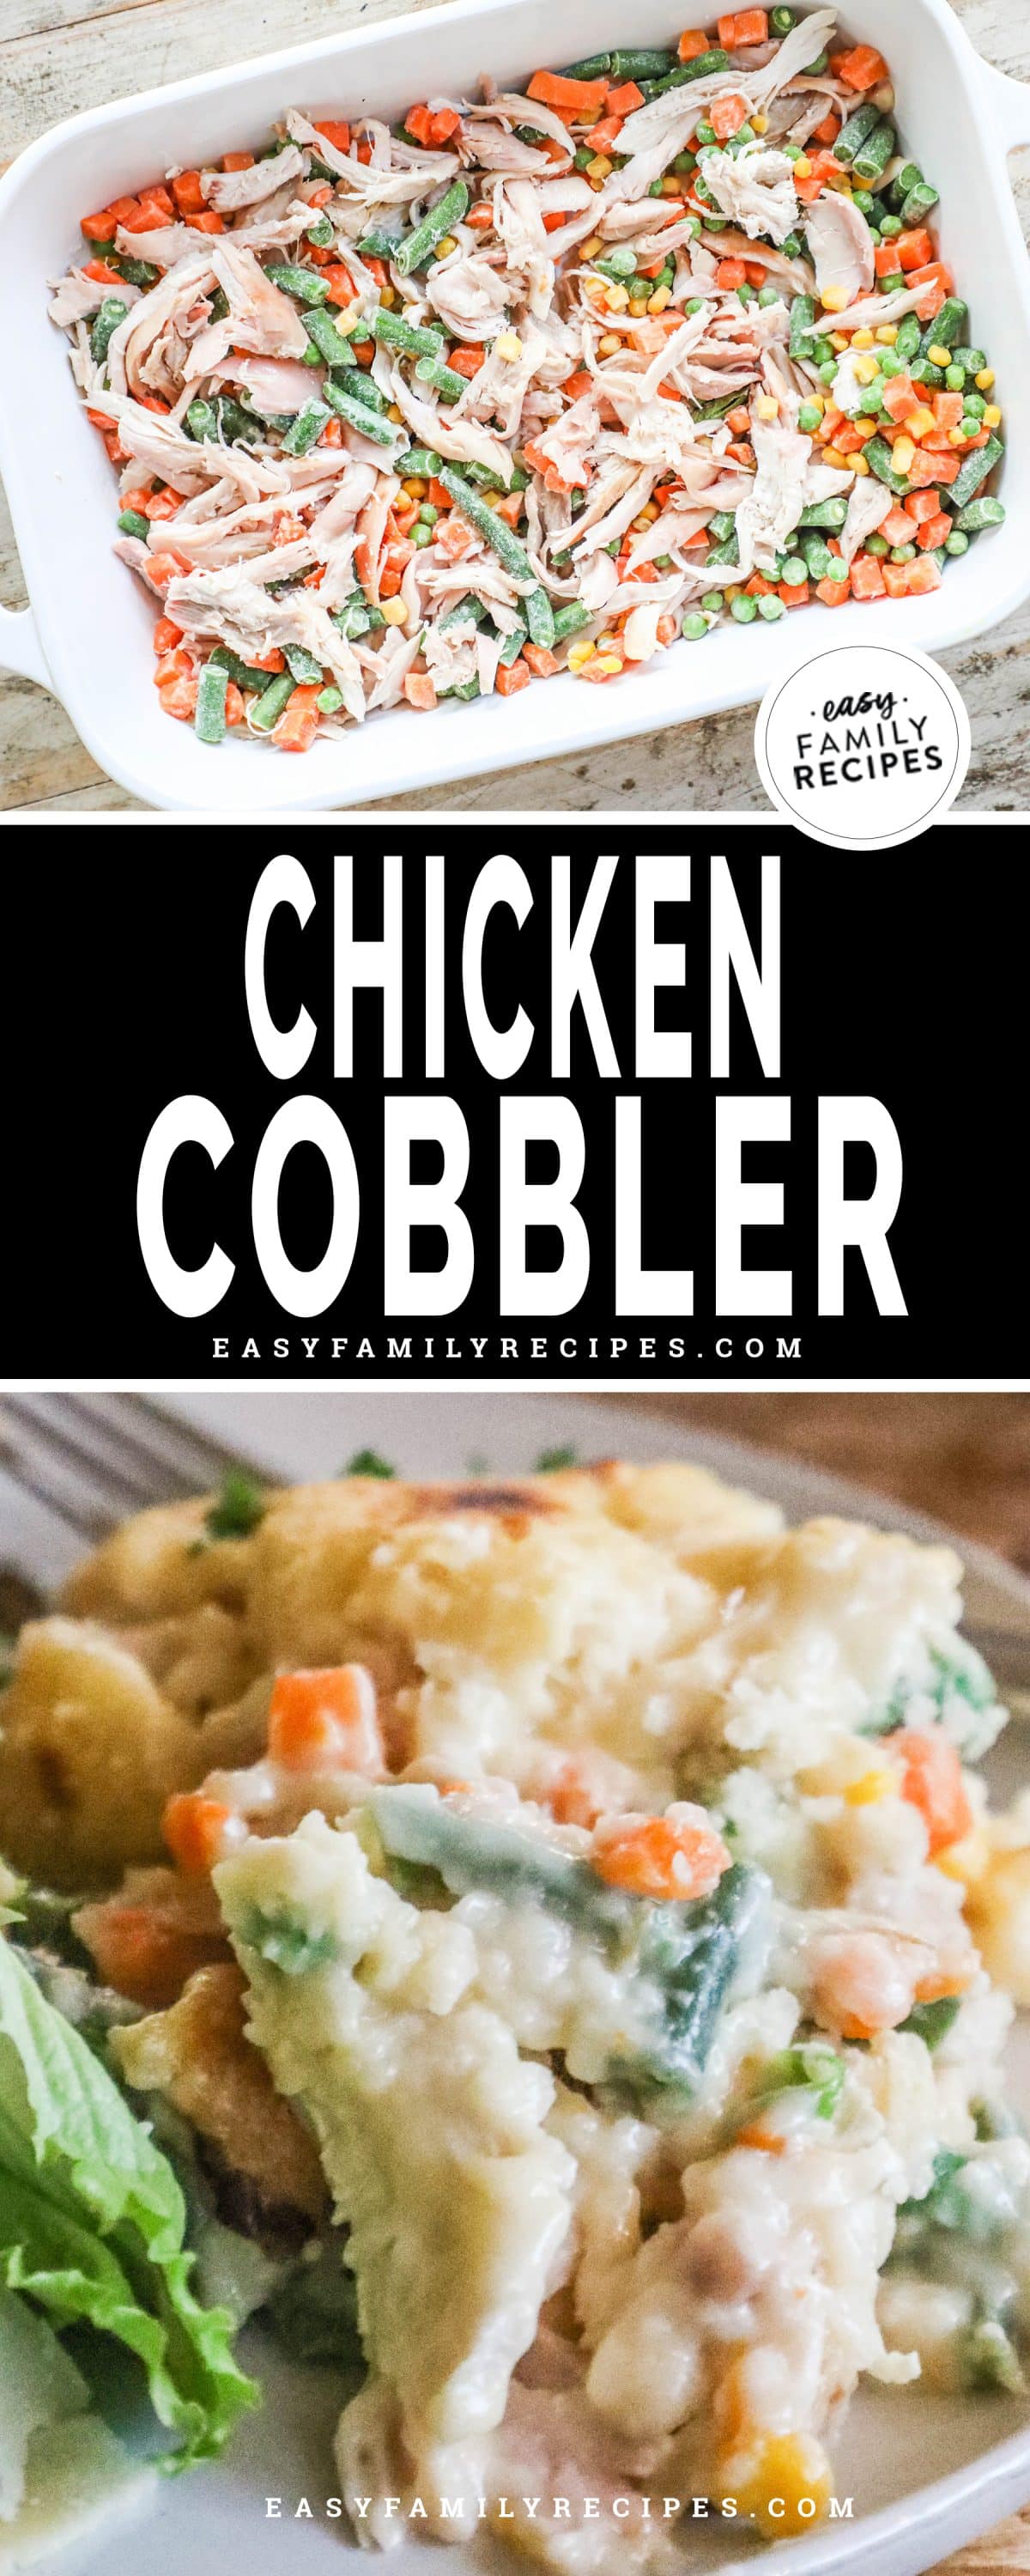 Chicken Cobbler Recipe